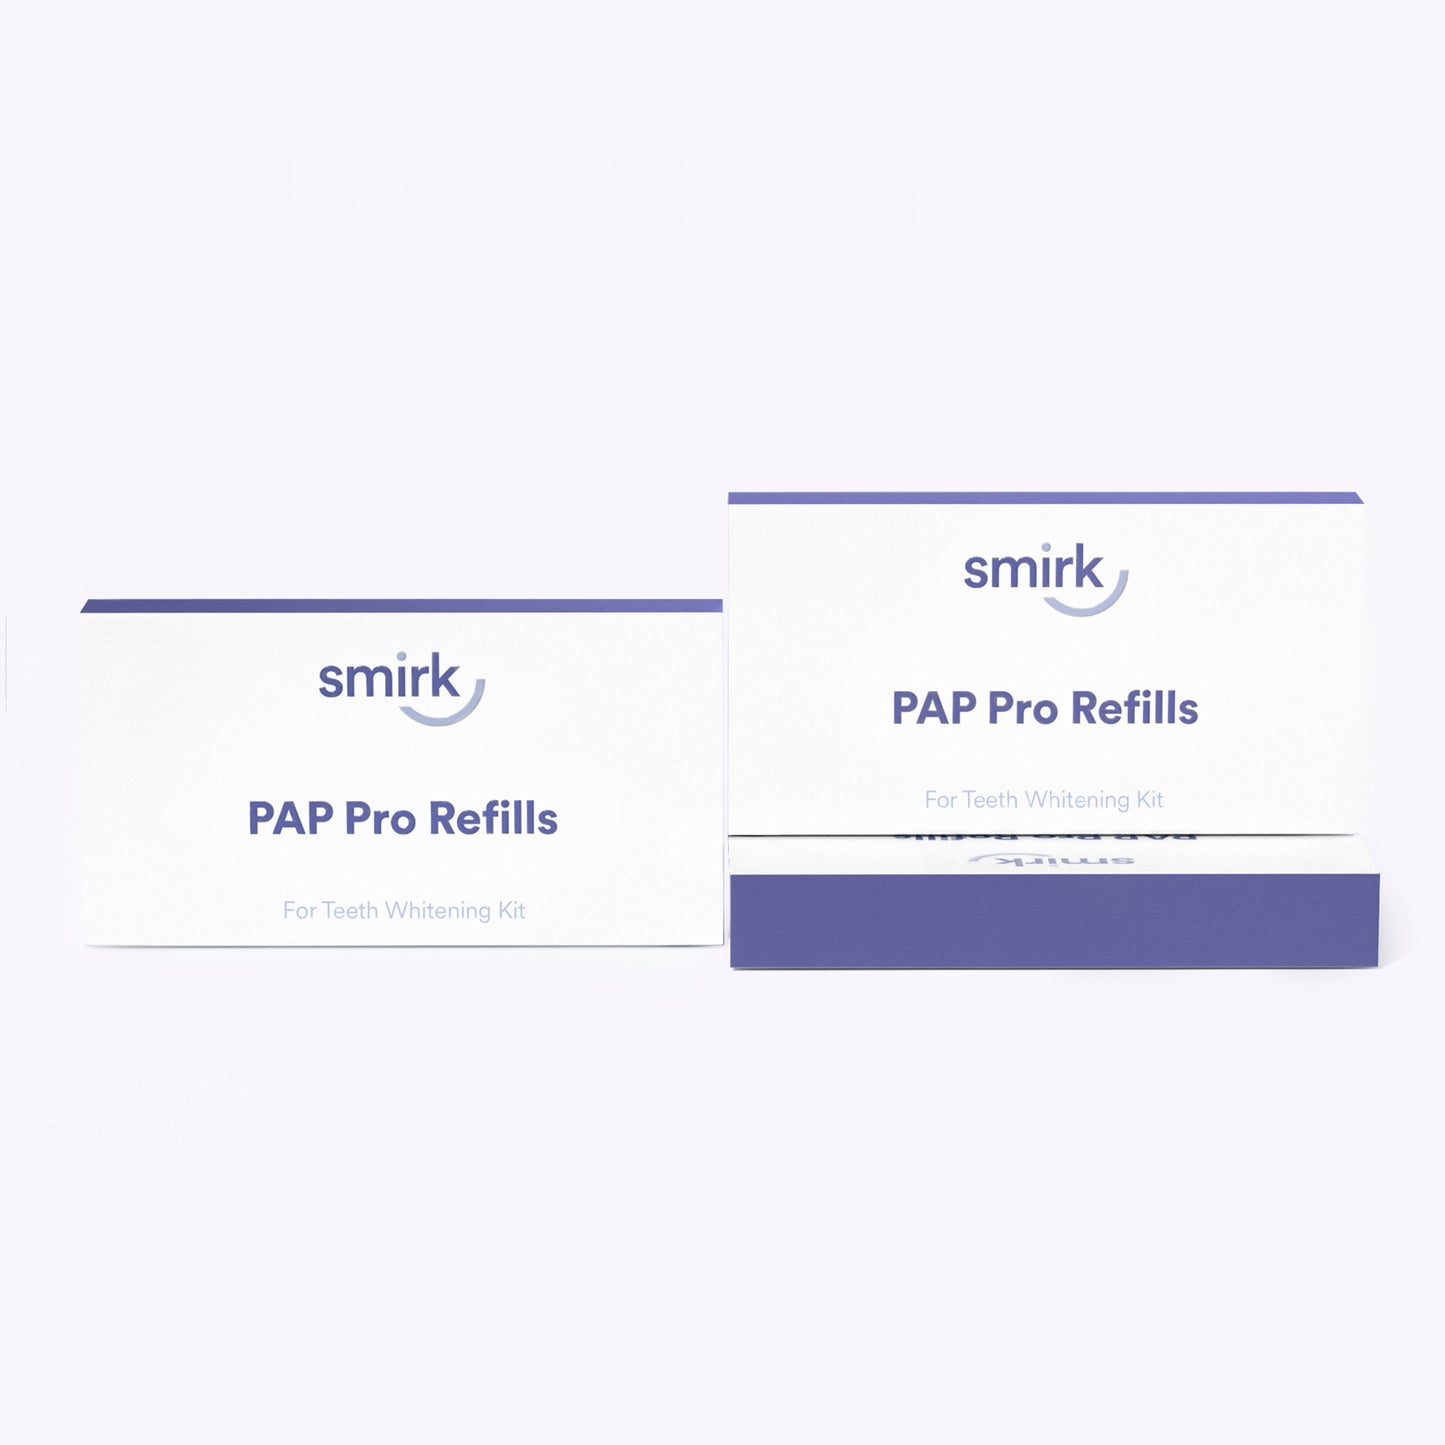 PAP Pro Refills for Teeth Whitening Kit